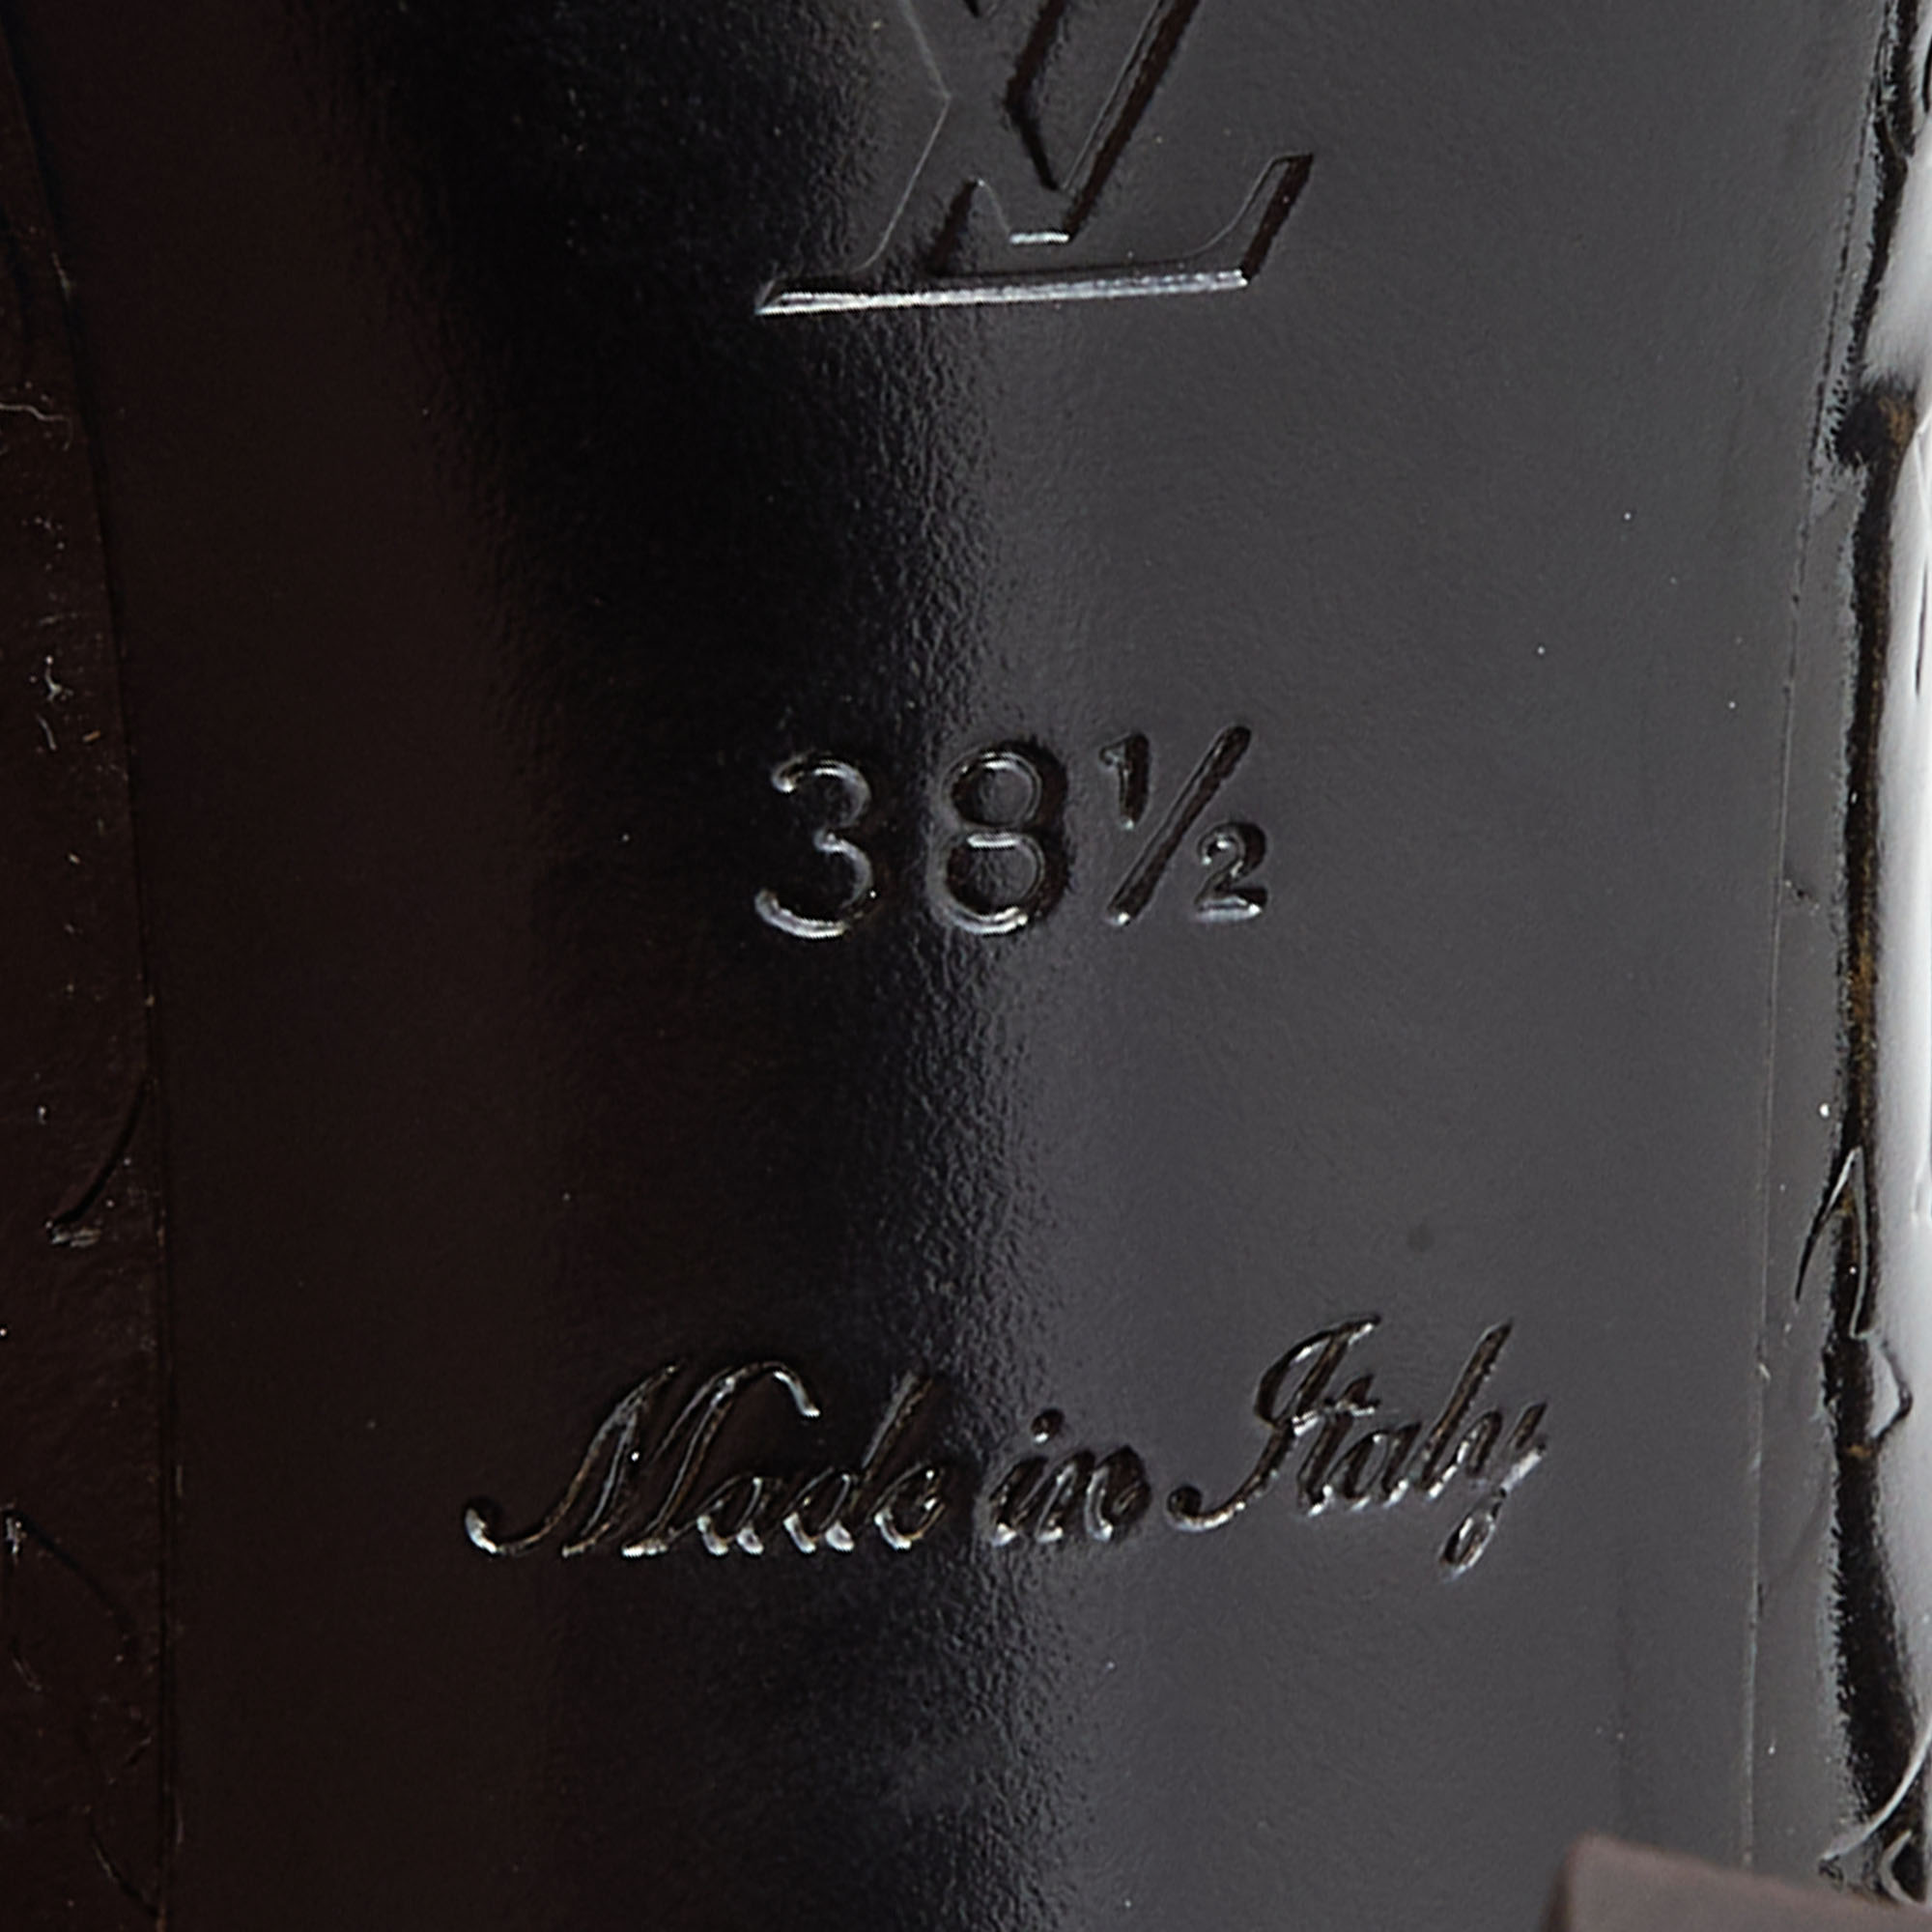 Louis Vuitton Amarante Monogram Vernis Claudia Peep Toe Pumps Size 38.5